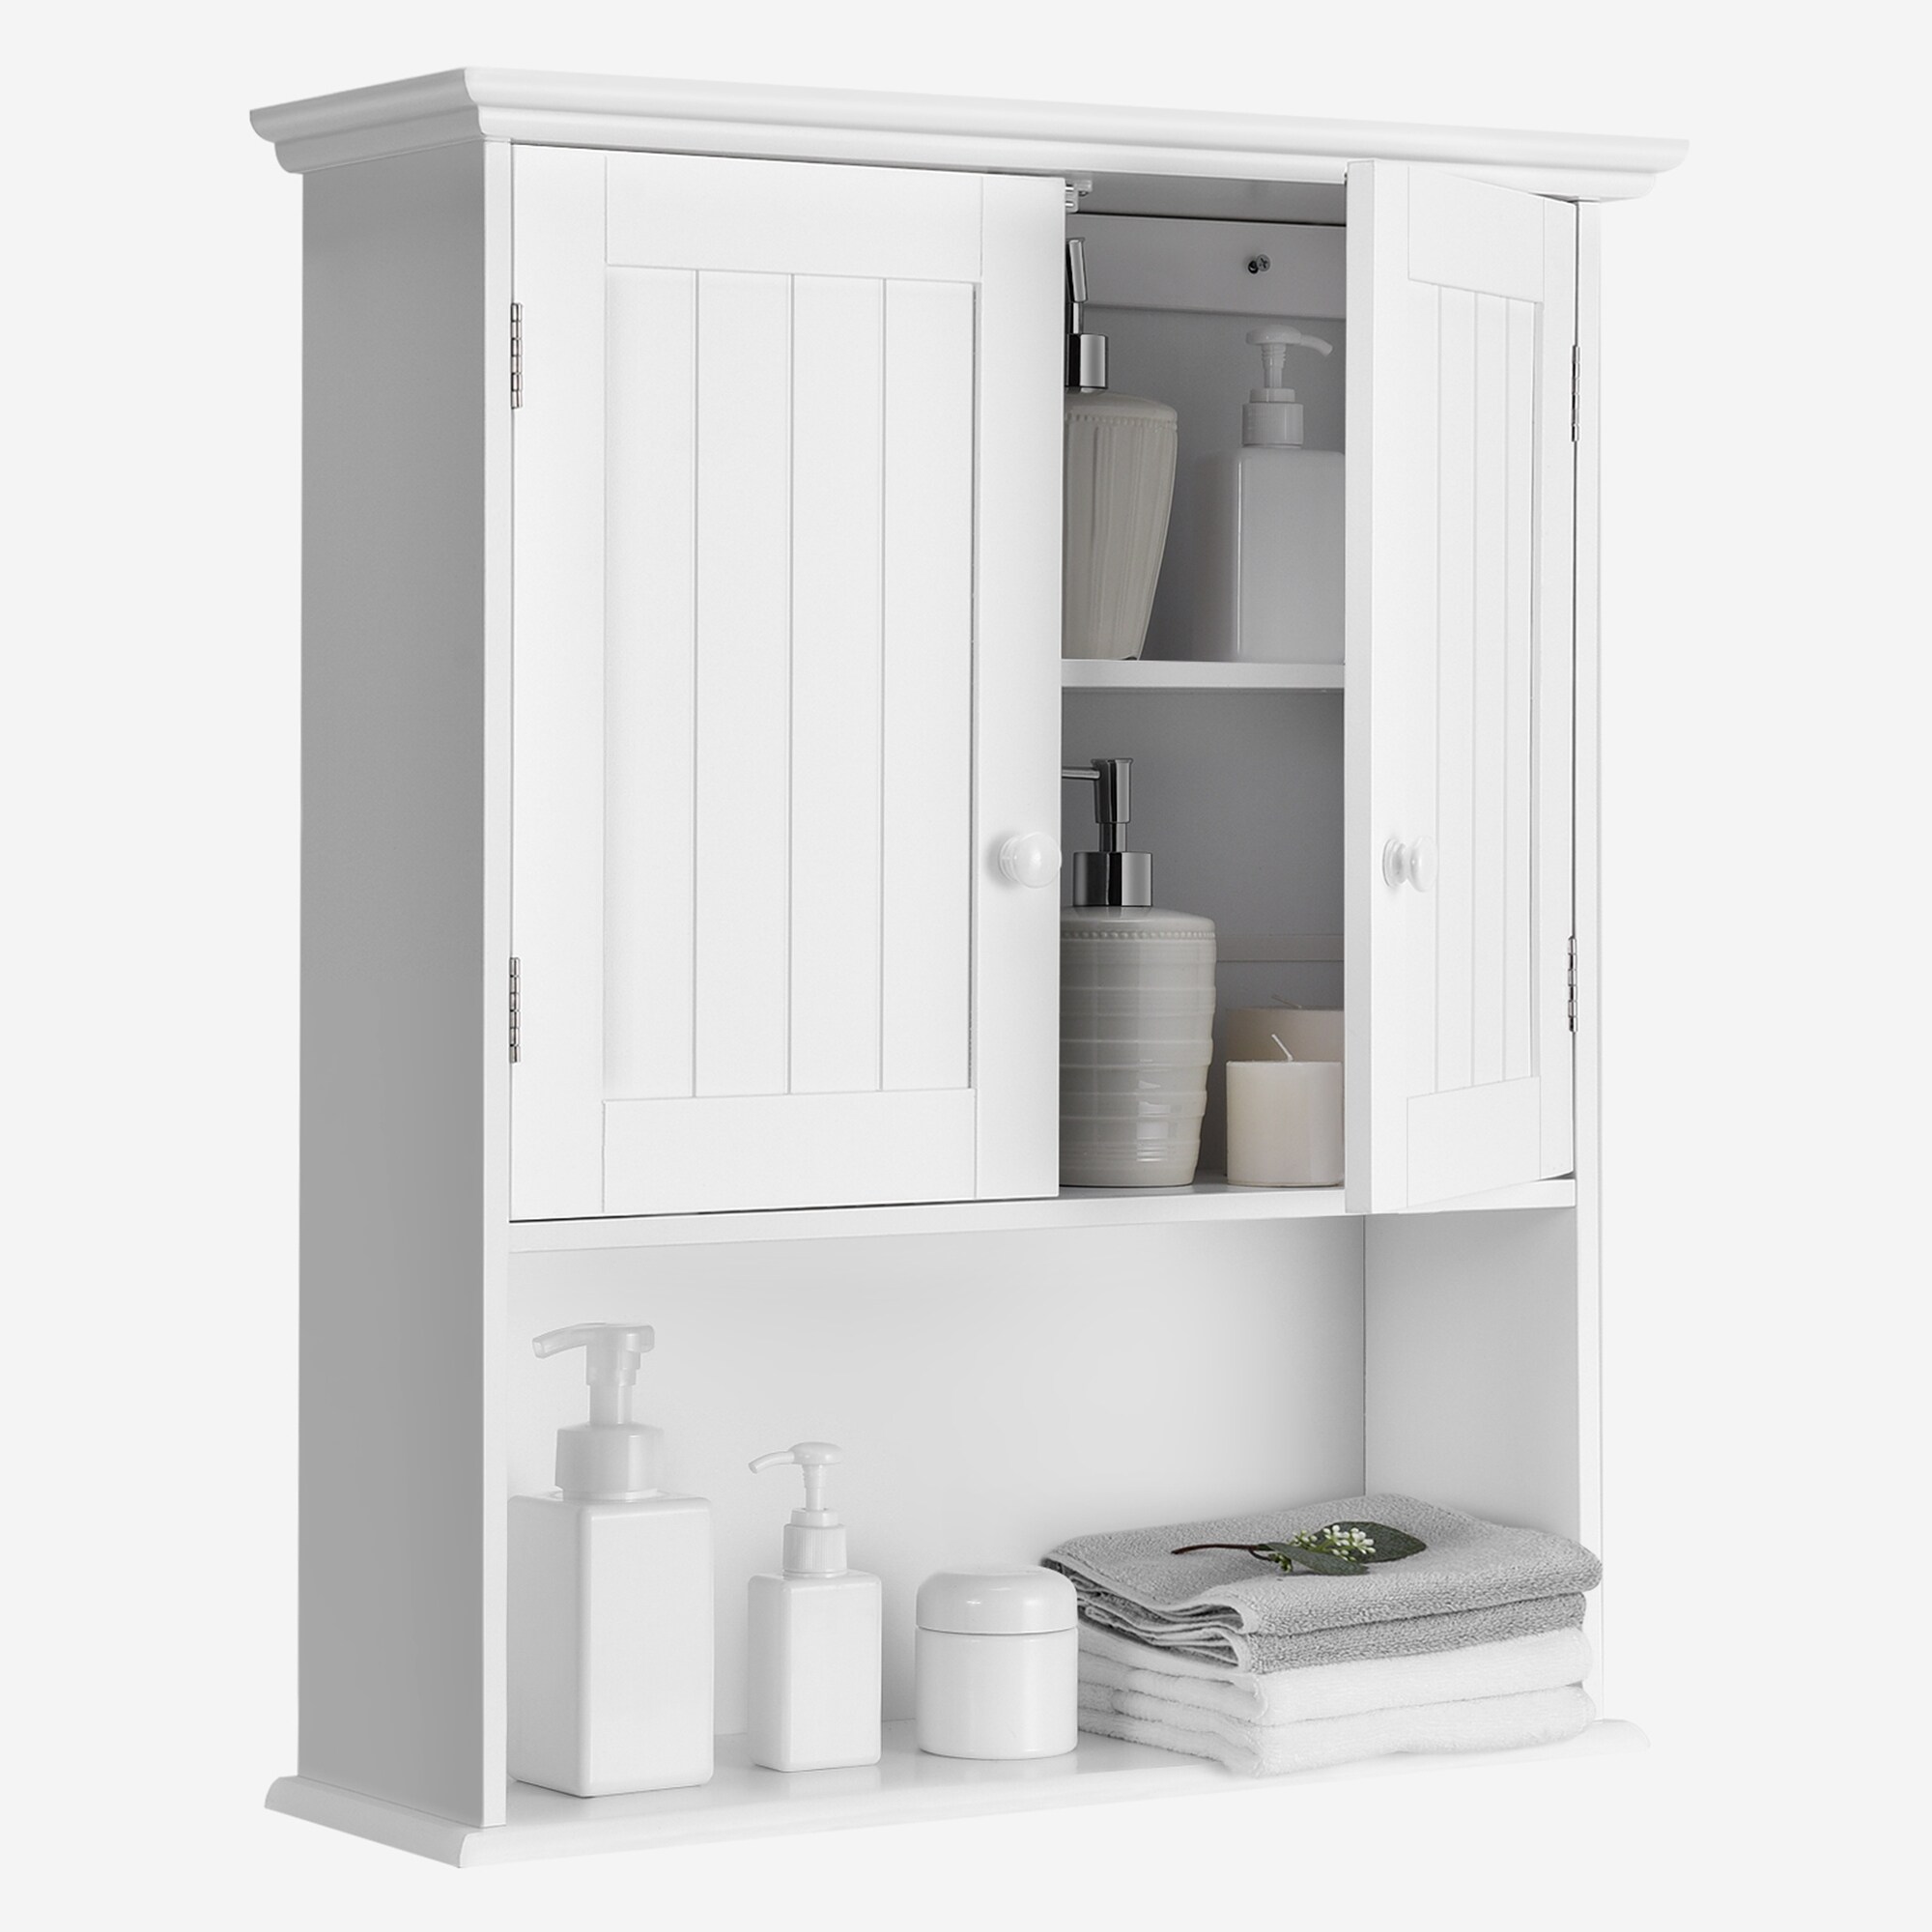 https://ak1.ostkcdn.com/images/products/is/images/direct/f9bc7abd979863a78a570cdc5cbf2cc64373abb4/Costway-Wall-Mount-Bathroom-Cabinet-Storage-Organizer-Medicine-Cabinet.jpg